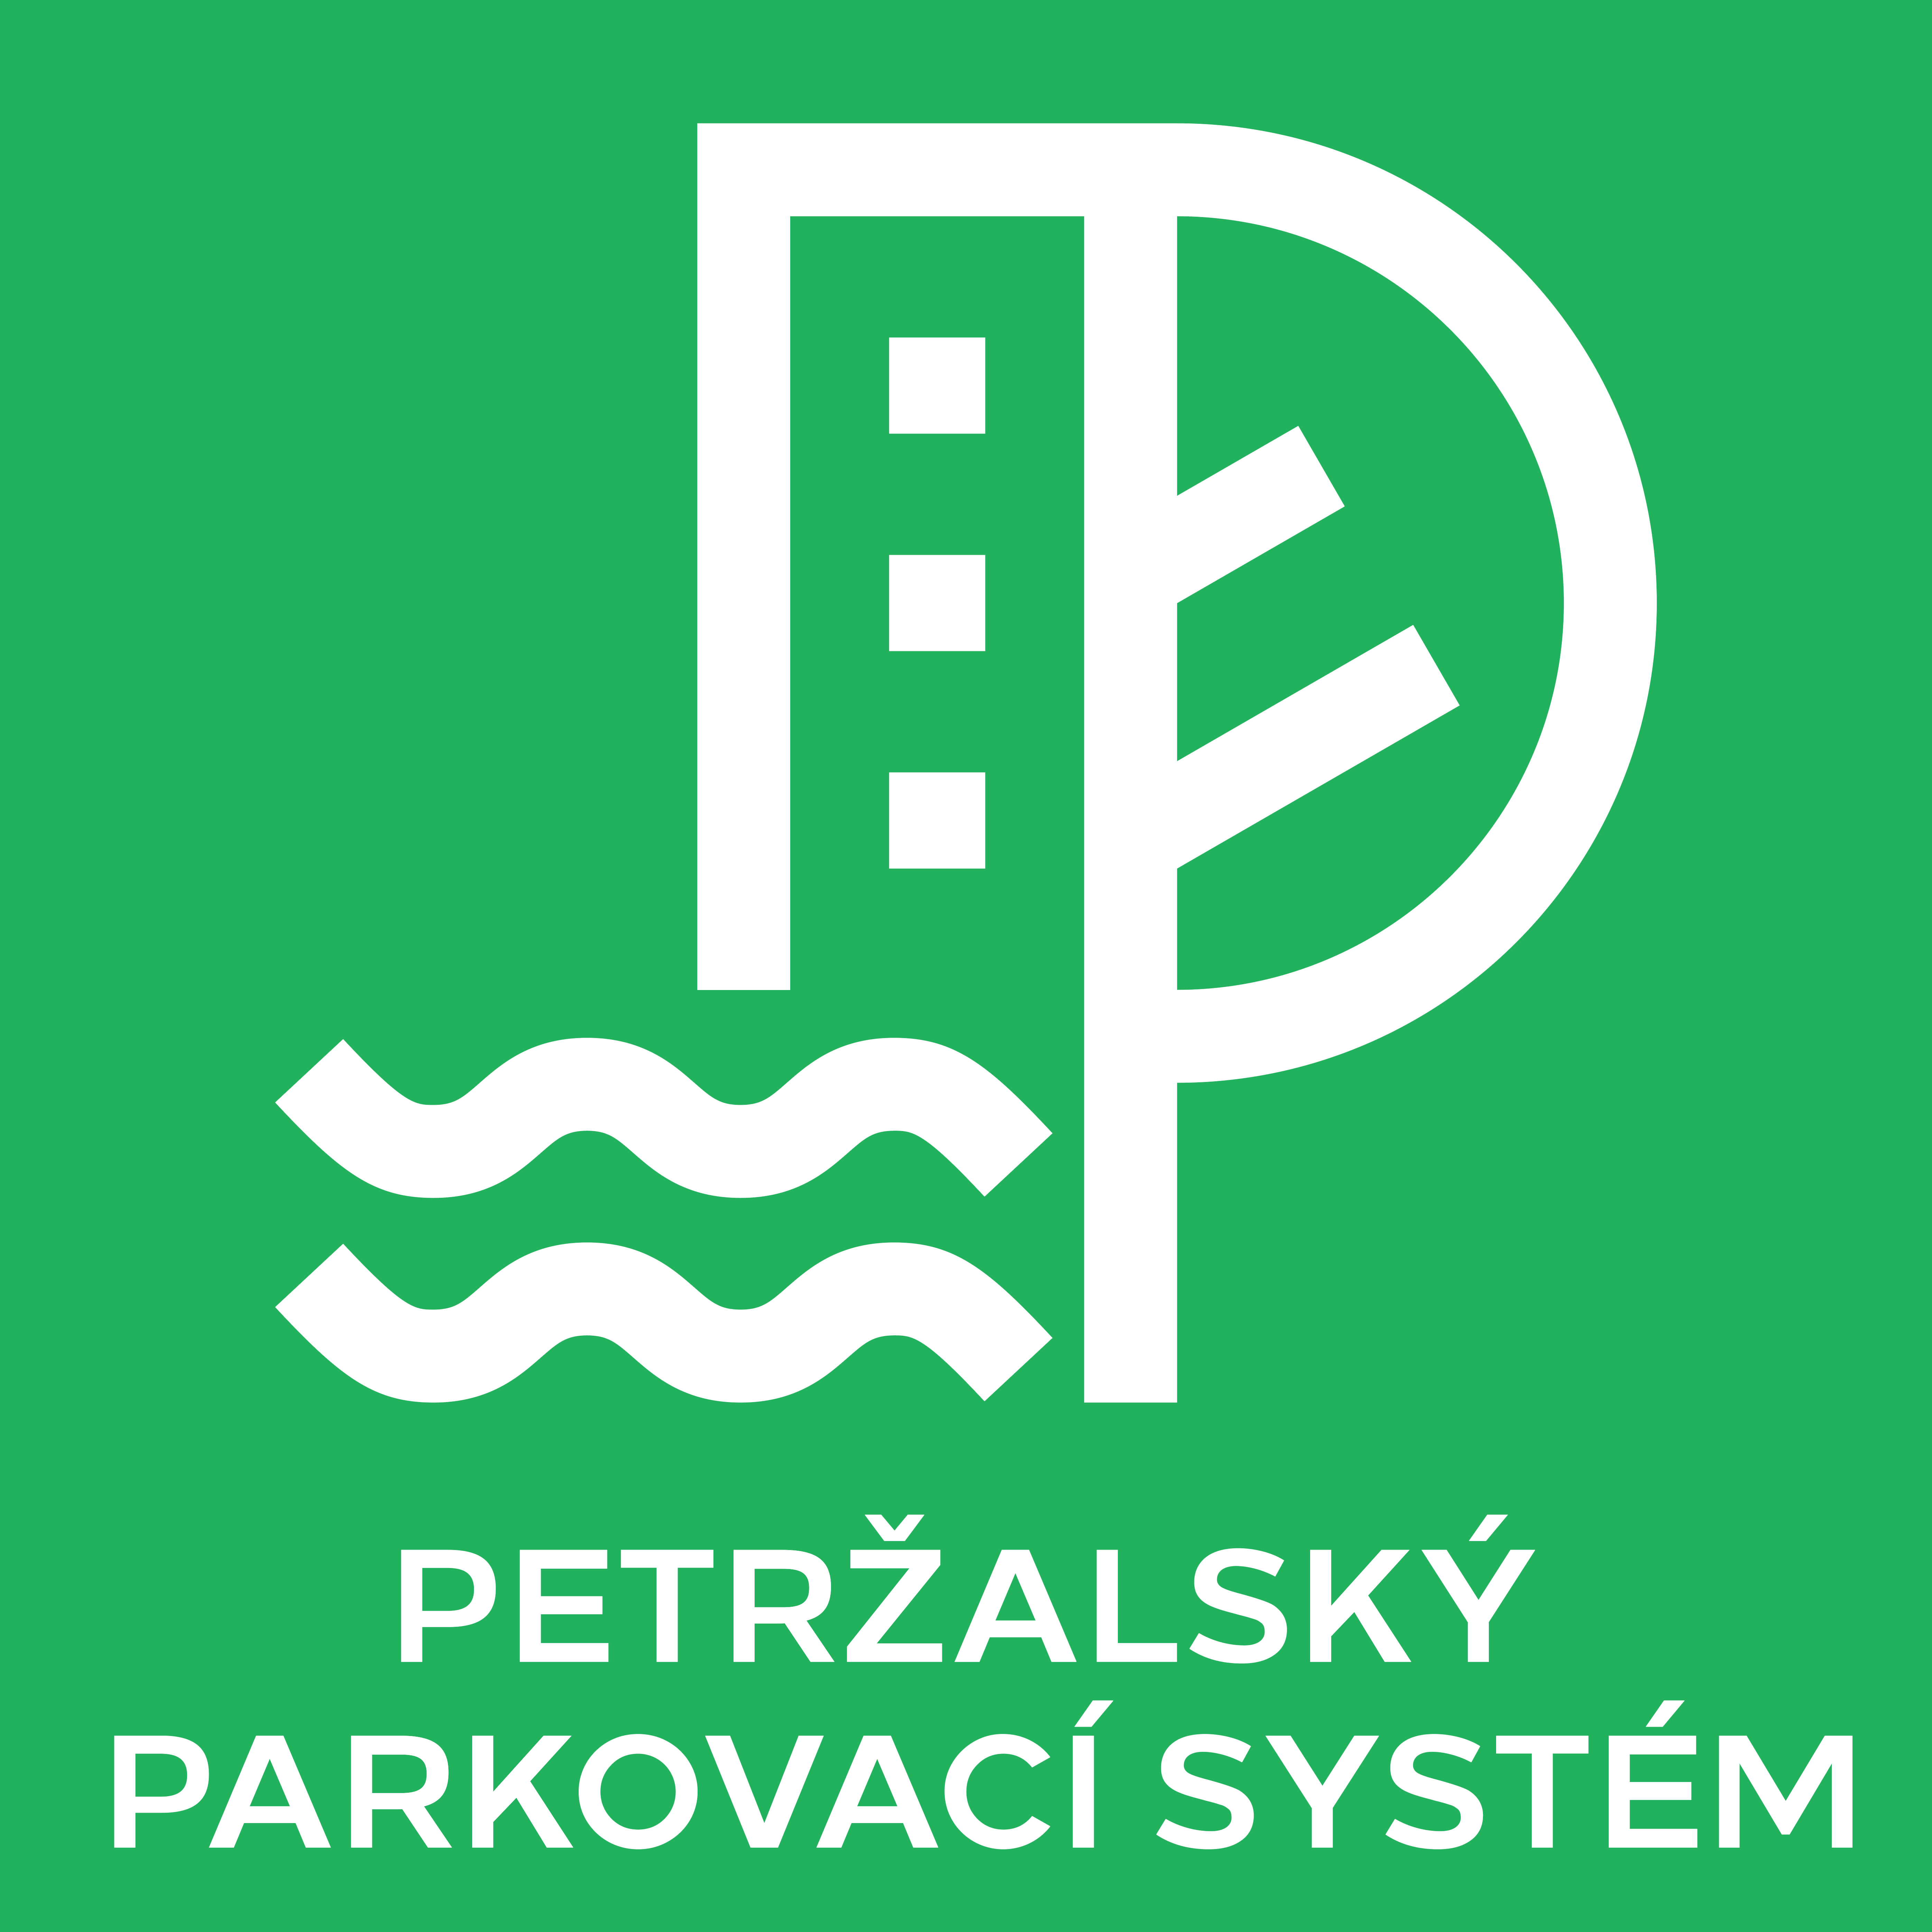 Tickets d'entrée - Parking ticket. Parkschein. Parkovacia karta. Donsinska  Ladova Jaskyna, Slowakei, Slovakia, Slovaquie. Parc National